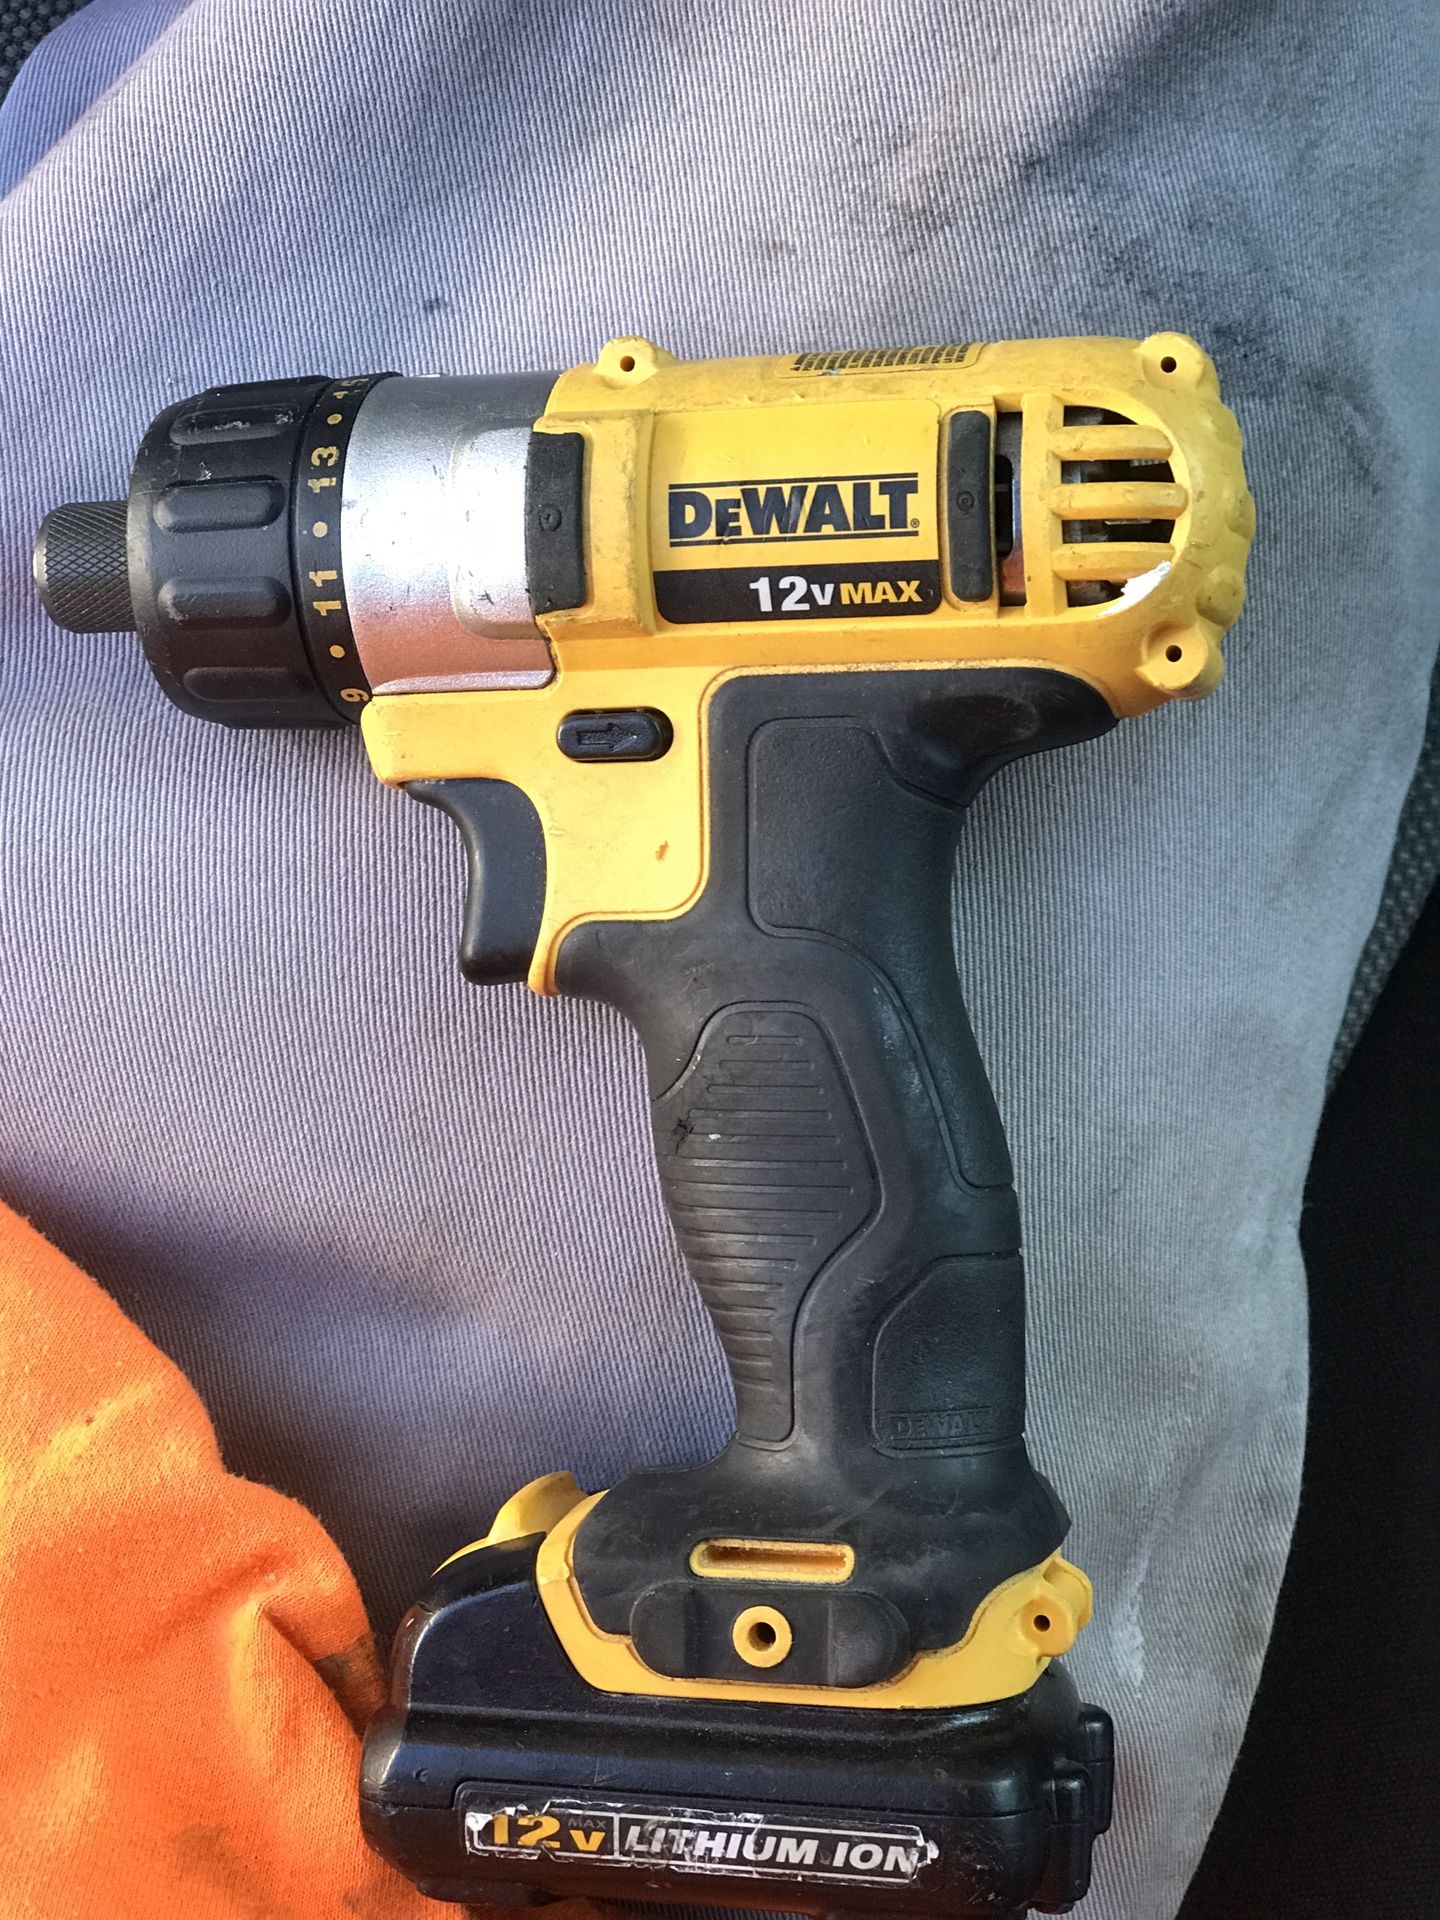 Dewalt 12v max drill with battery